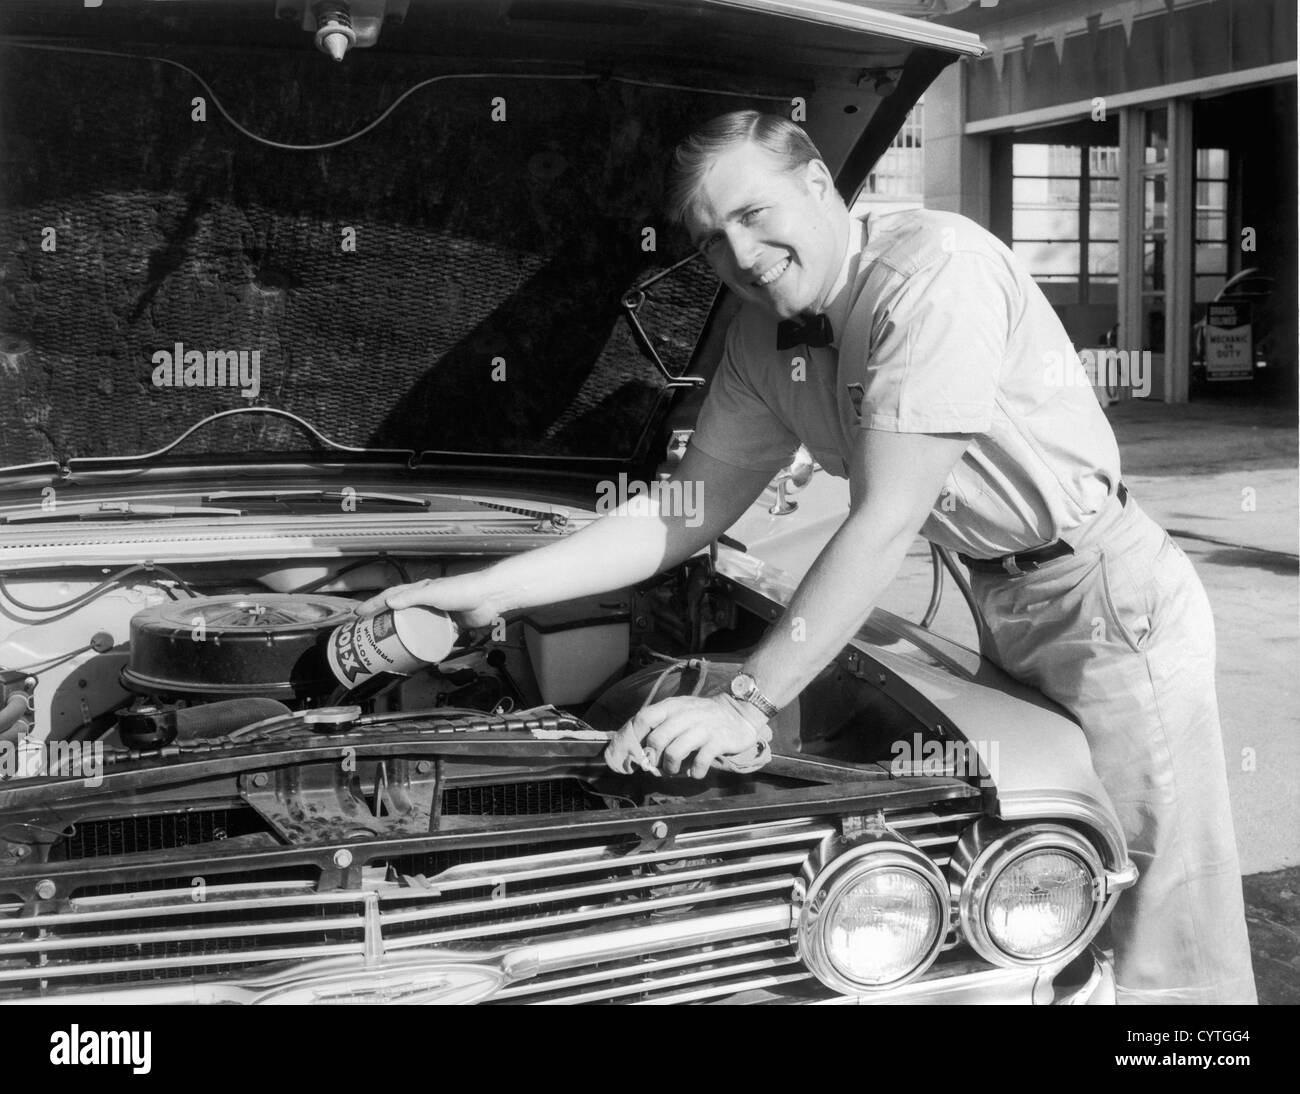 Service man replacing oil in car Stock Photo